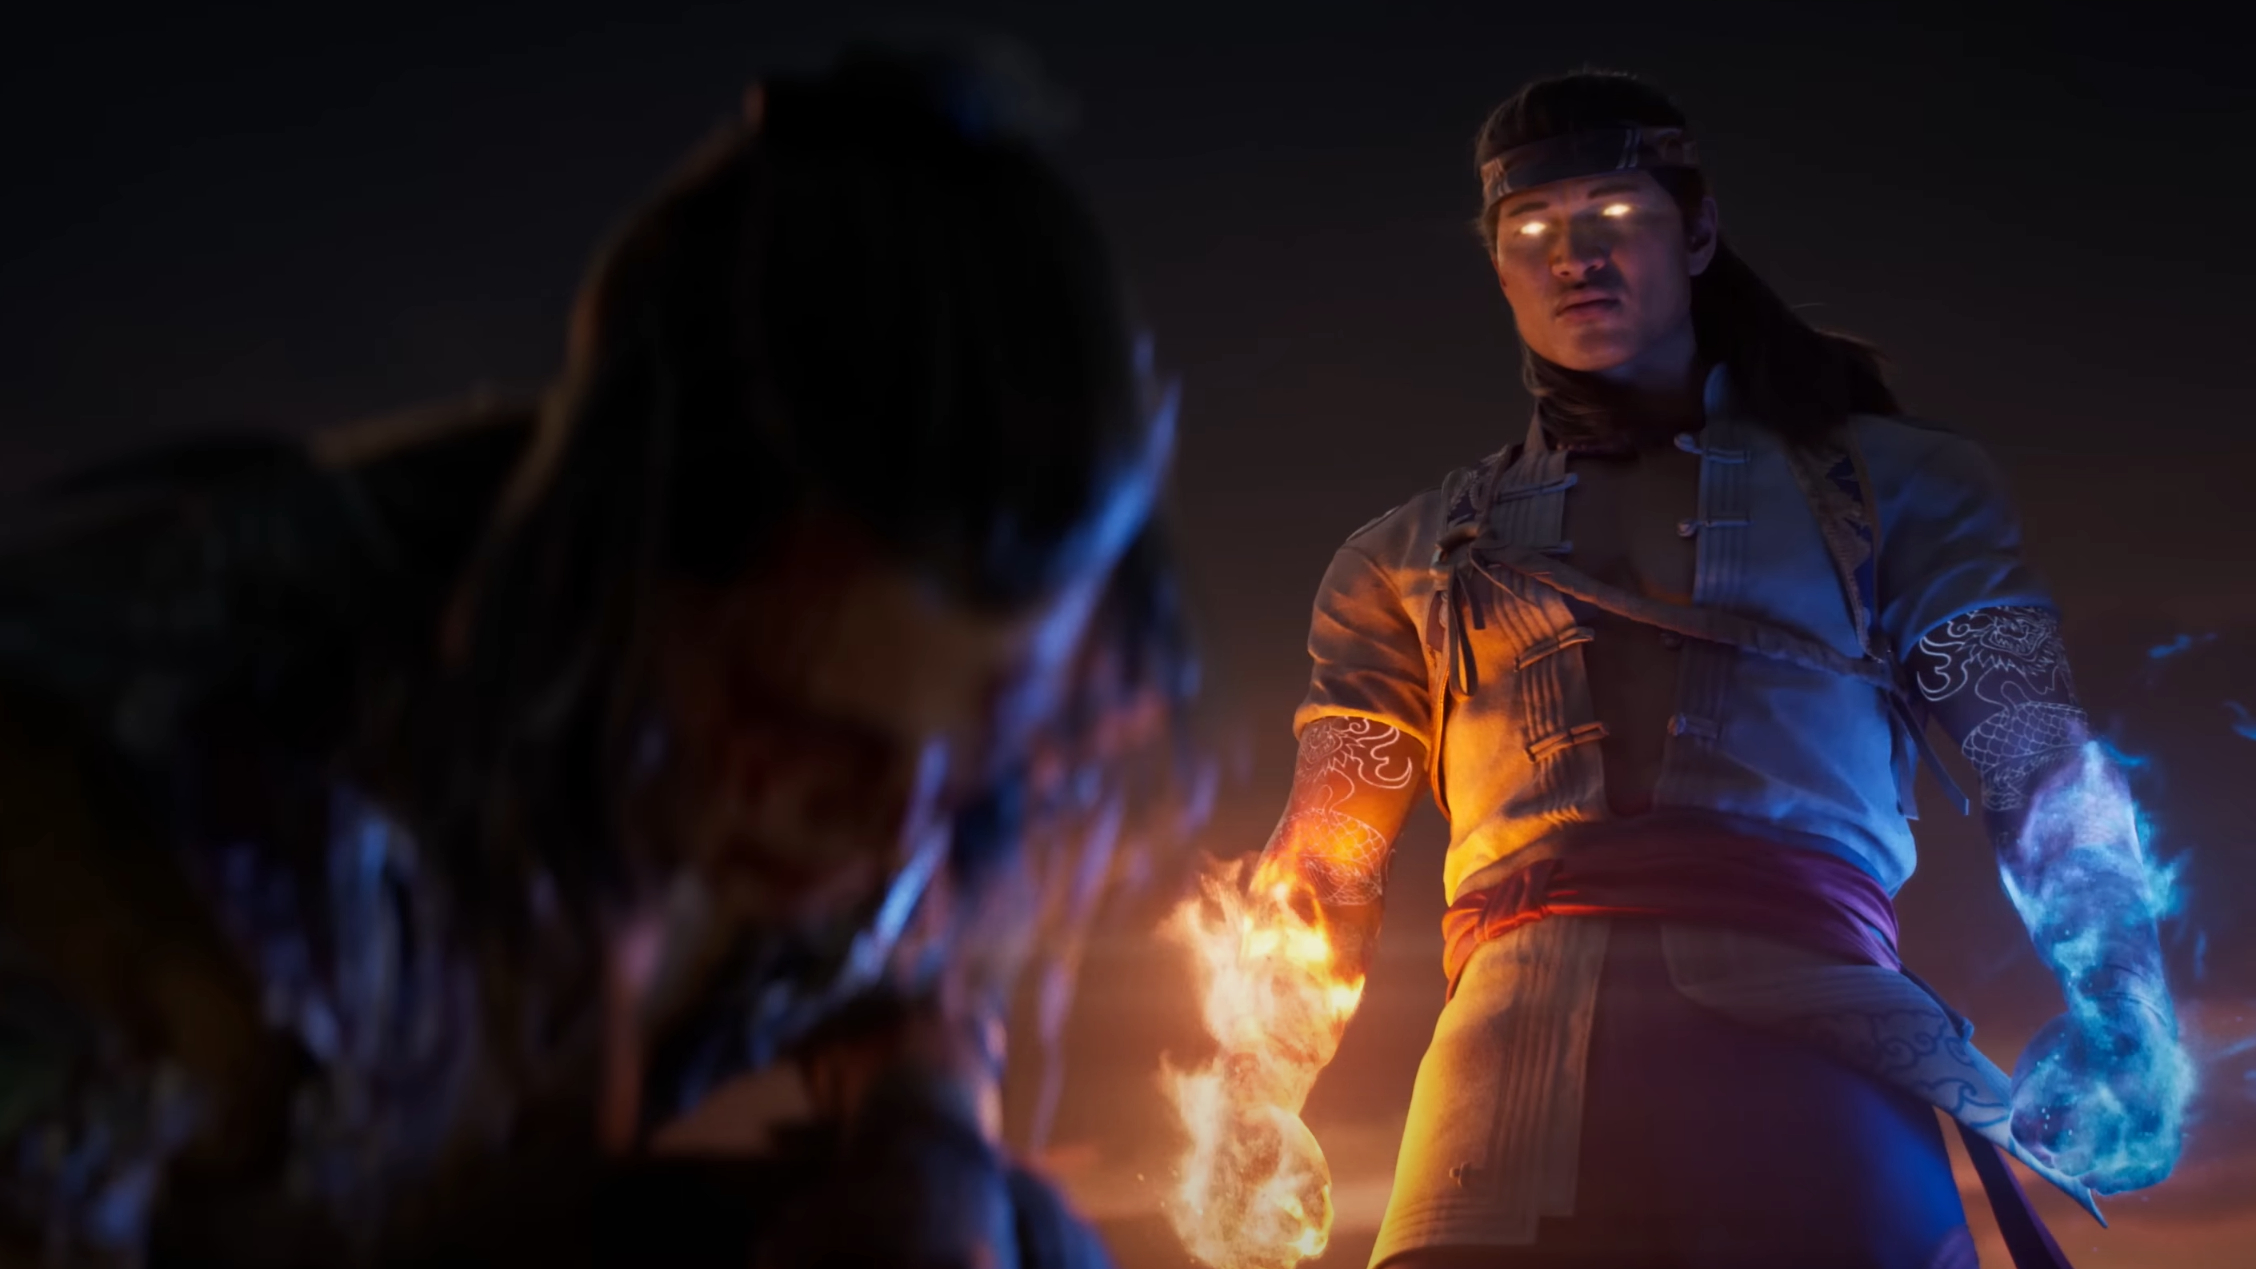 Mortal Kombat 1's online stress test launches next week - The Tech Game